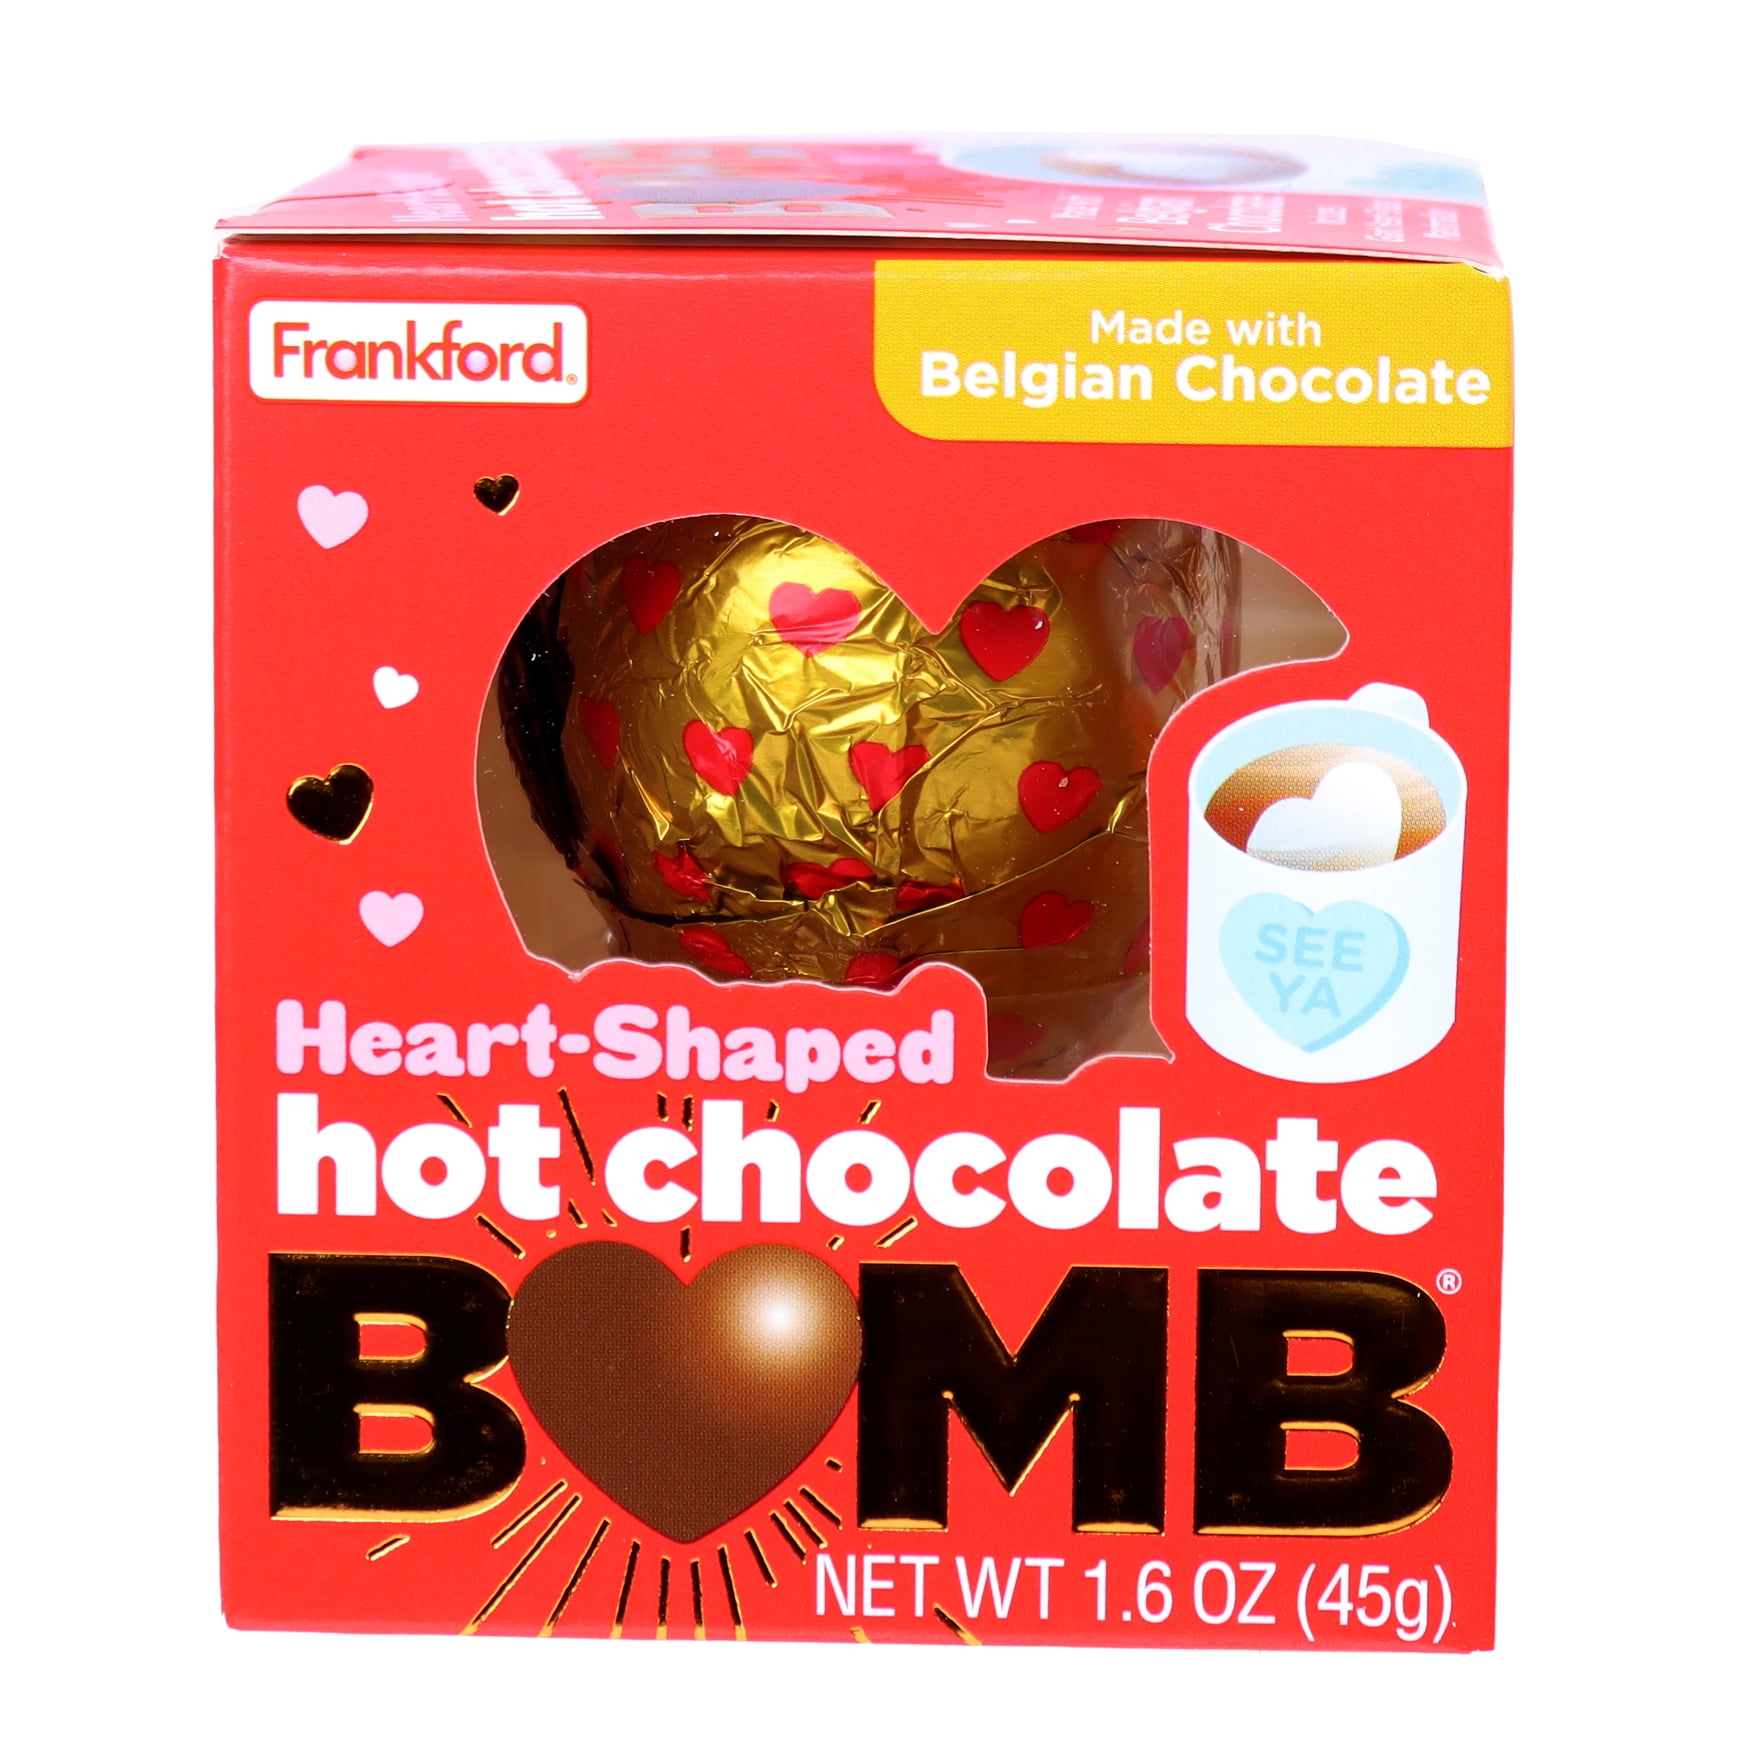 Valentine's Heart Hot Chocolate Bomb - The Little Blog Of Vegan